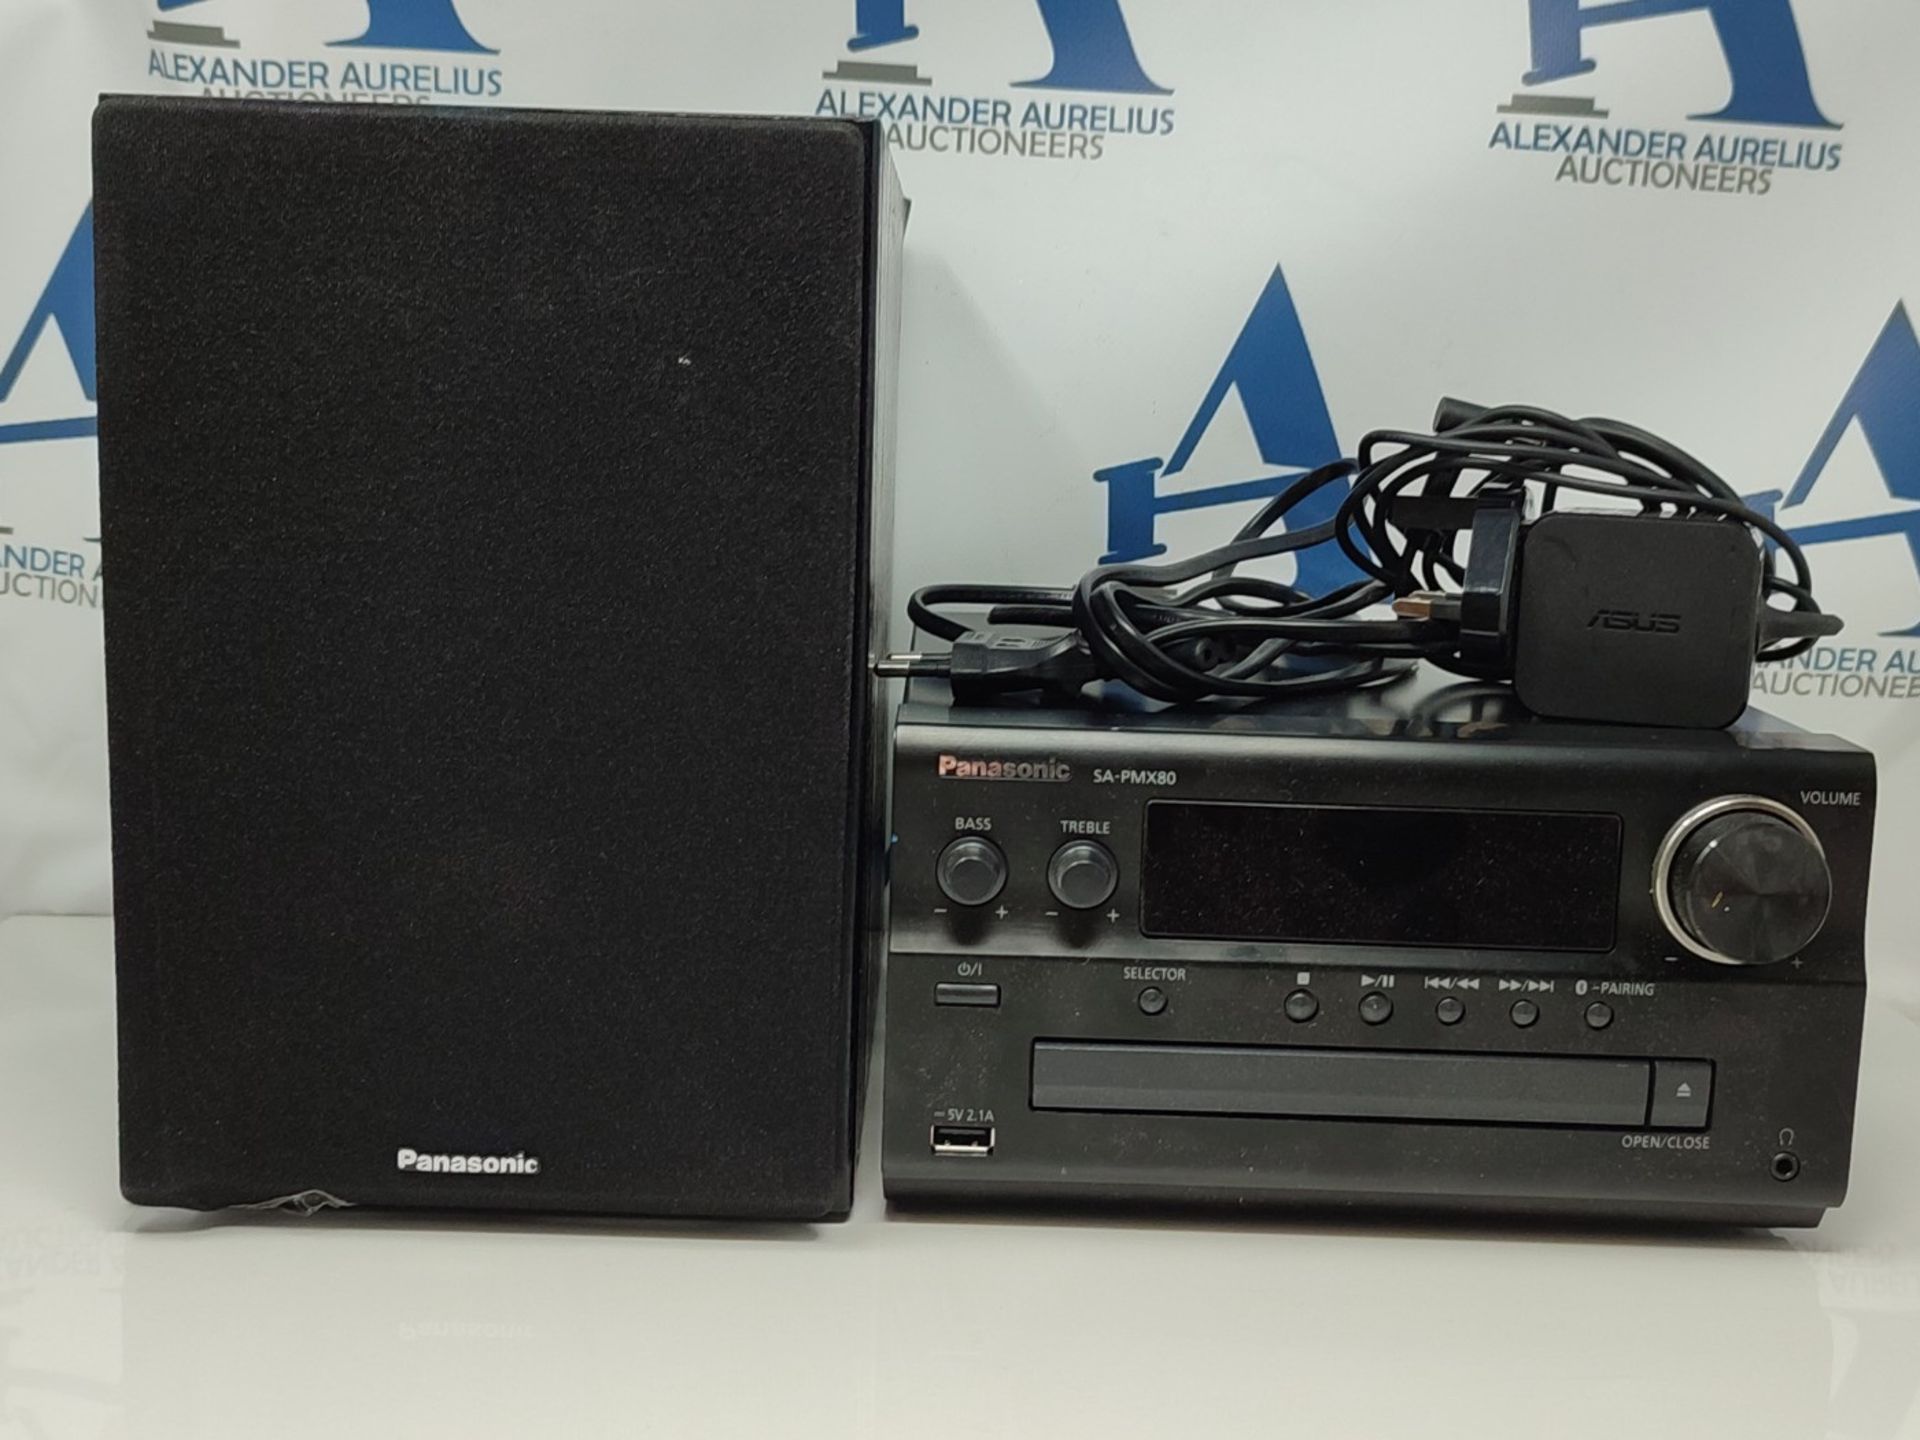 Panasonic CD Stereo System model no. SA-PMX80 - Image 2 of 3